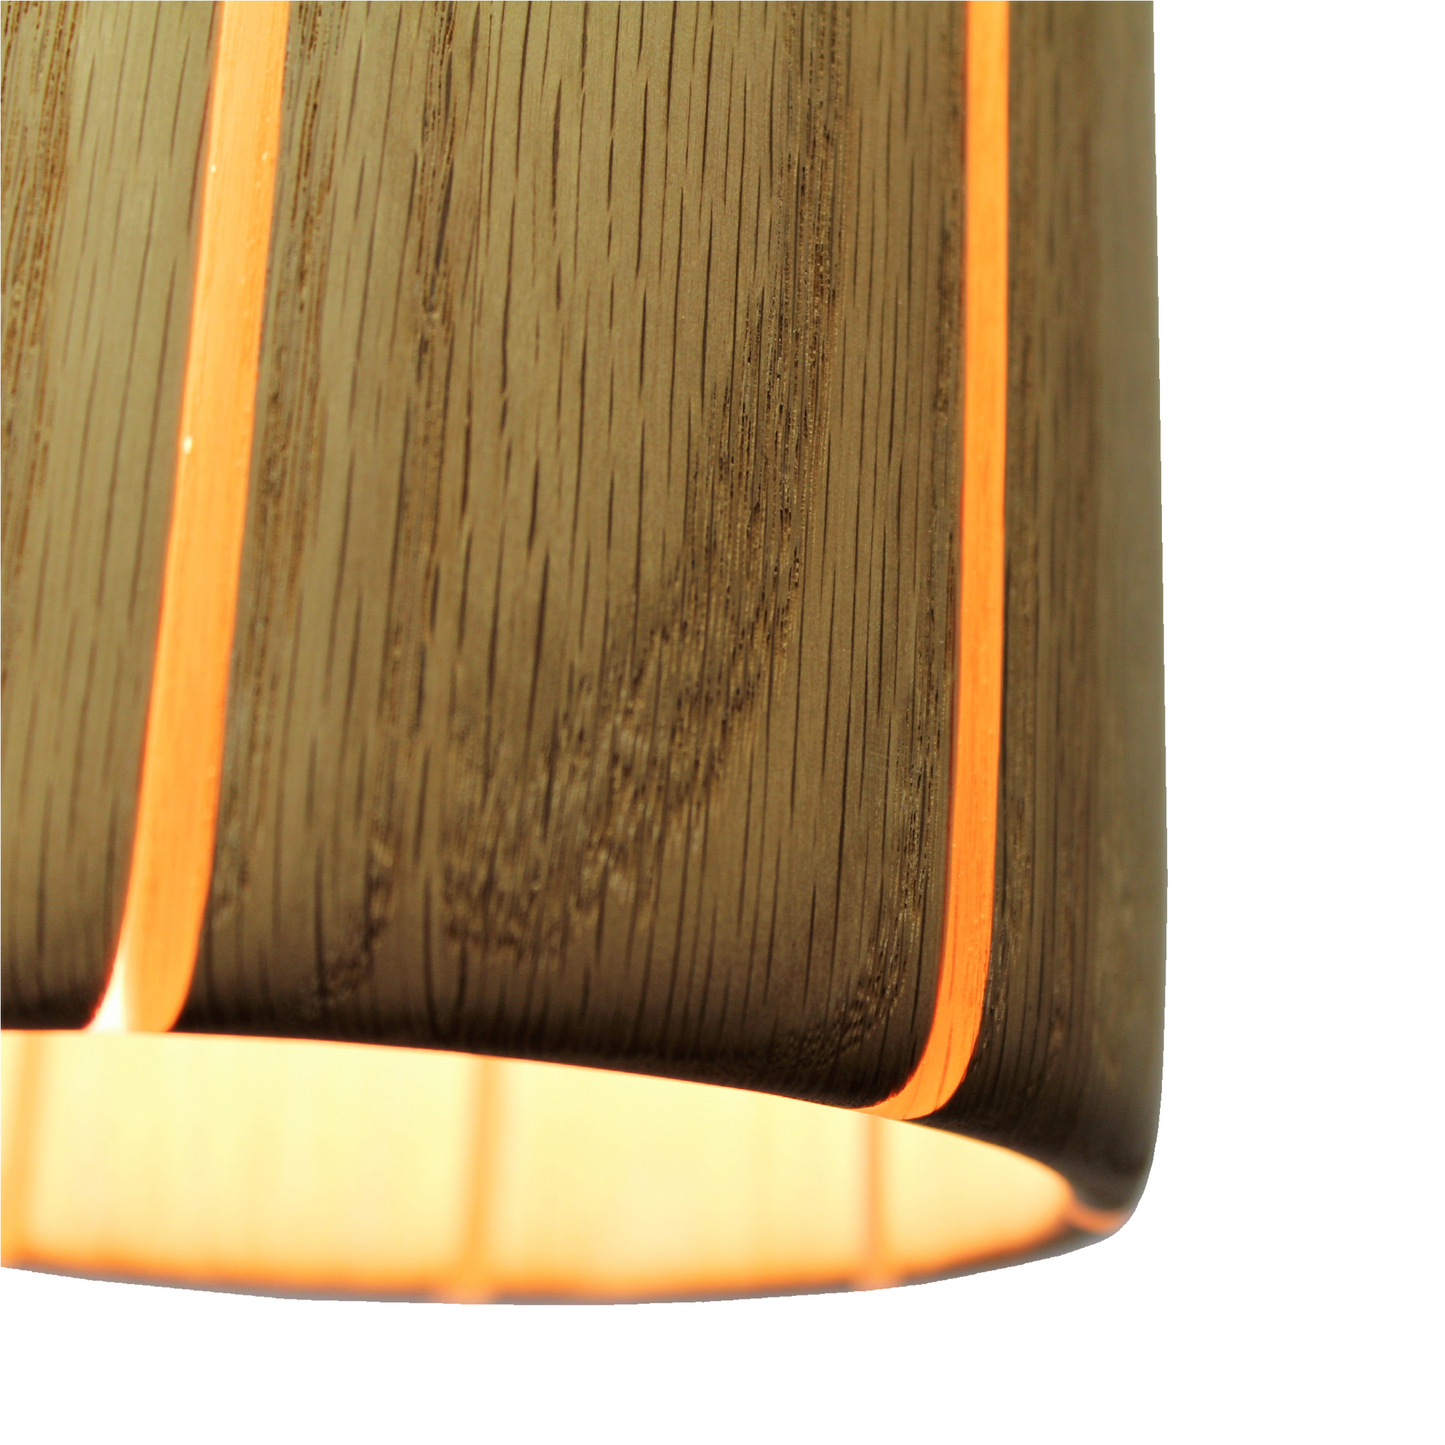 Quarter image of Strake Studio Latimore Pendant Lamp made from Oak wood.